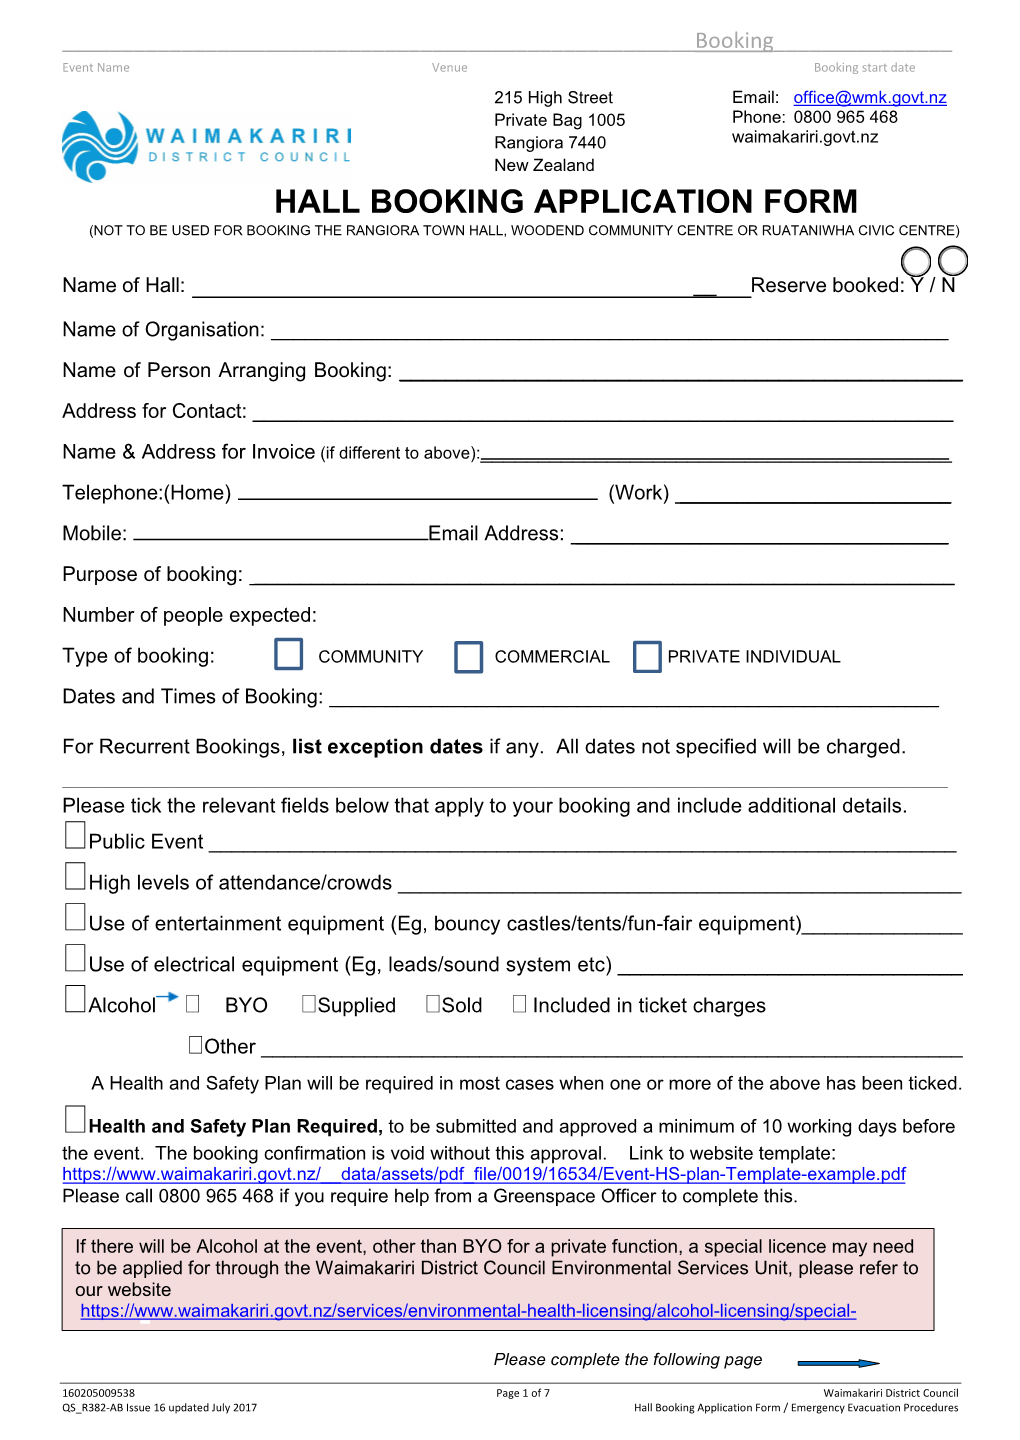 QS-R382-AB Hall Booking Application Form